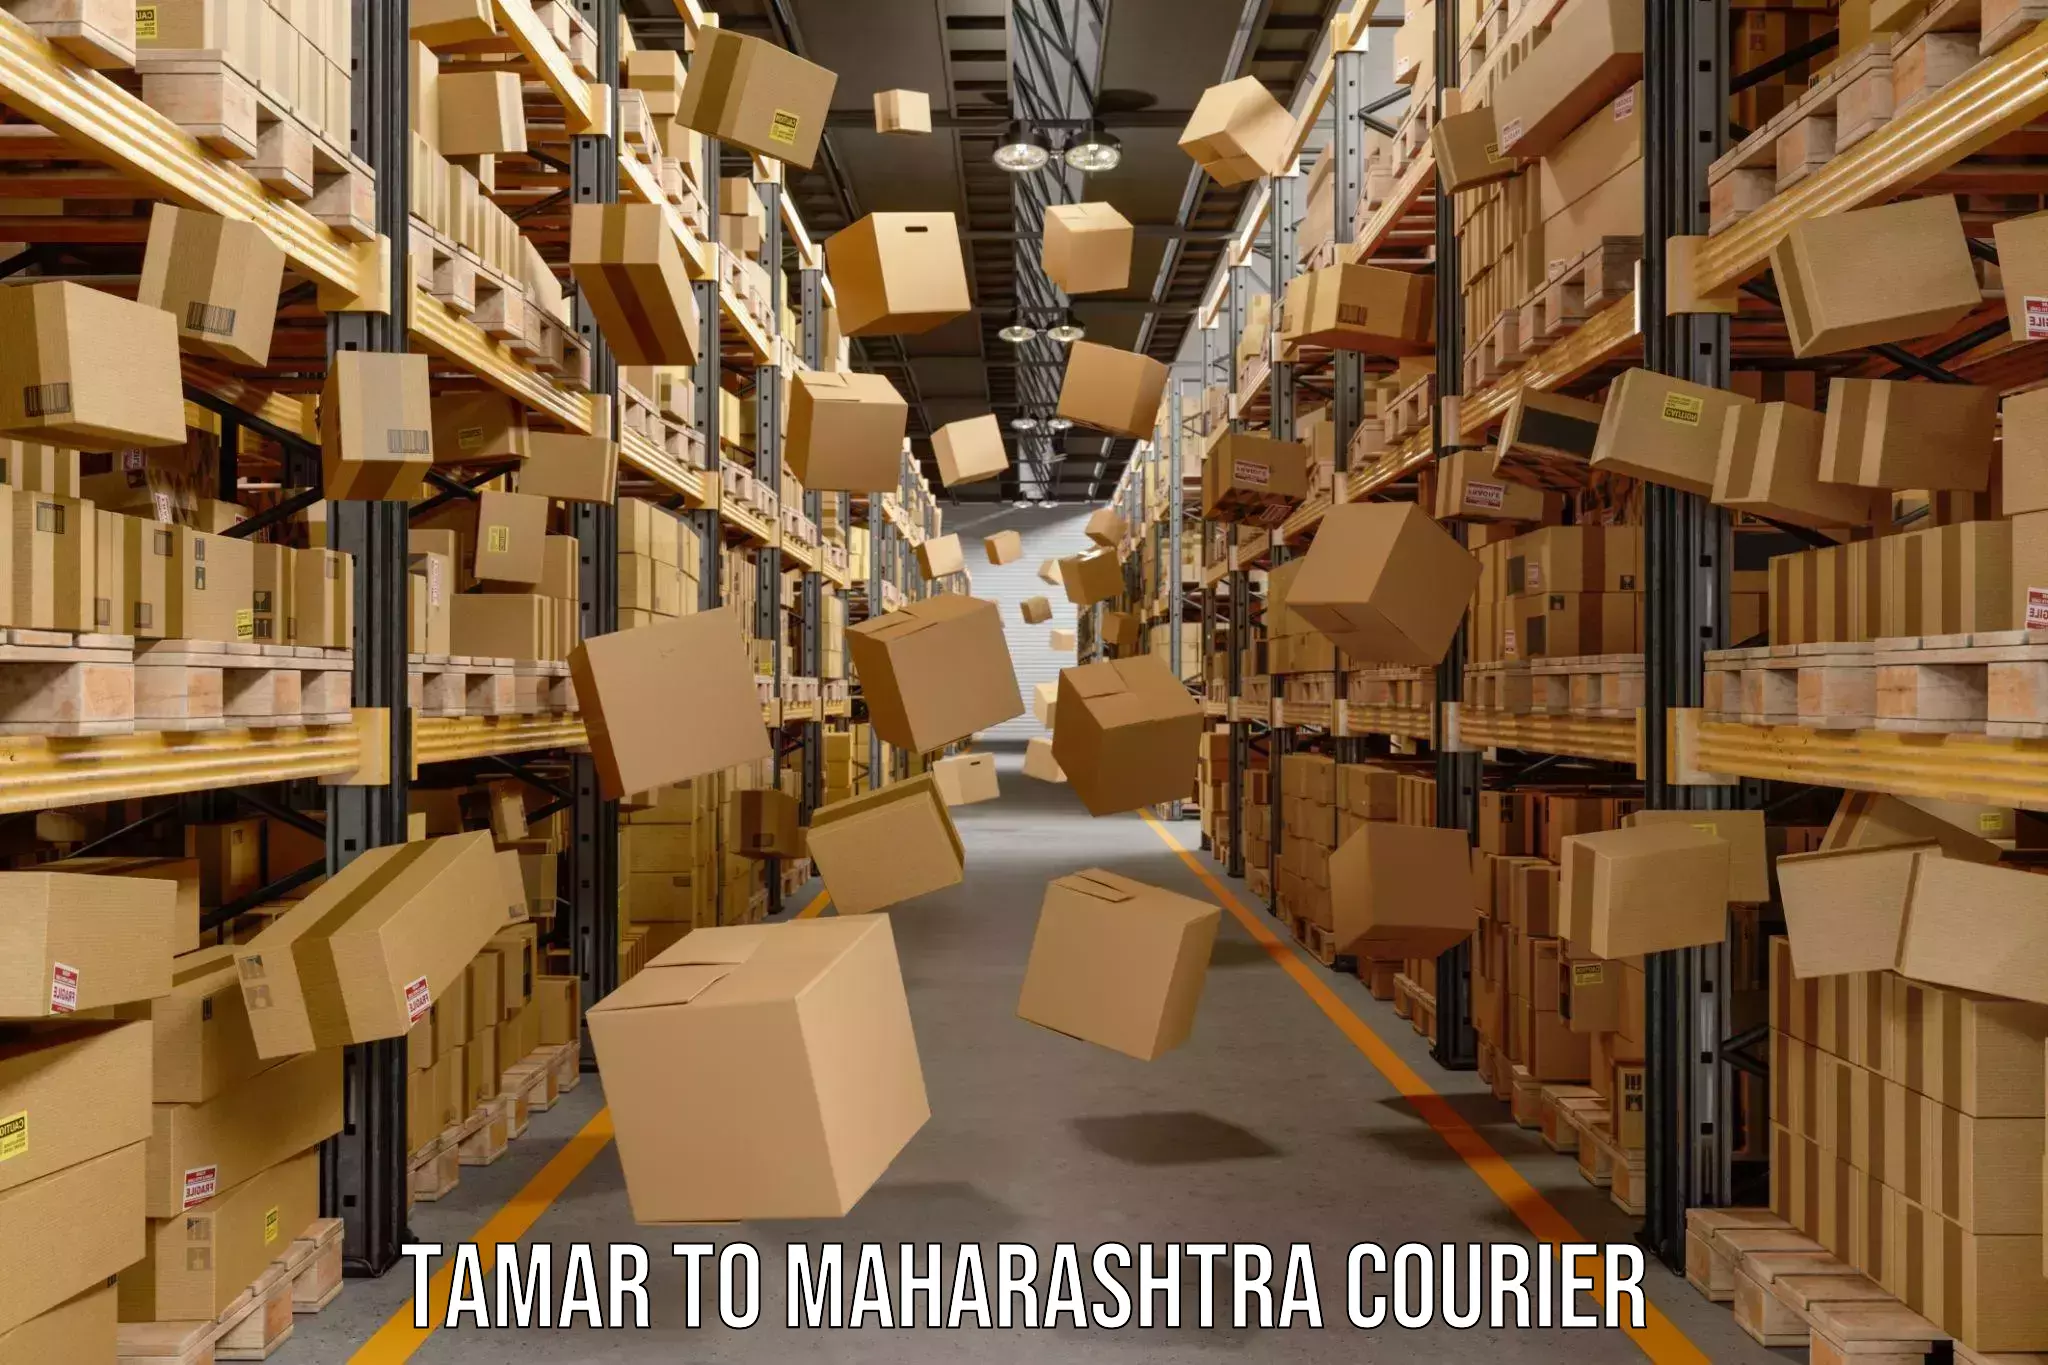 Next-day delivery options Tamar to Maharashtra